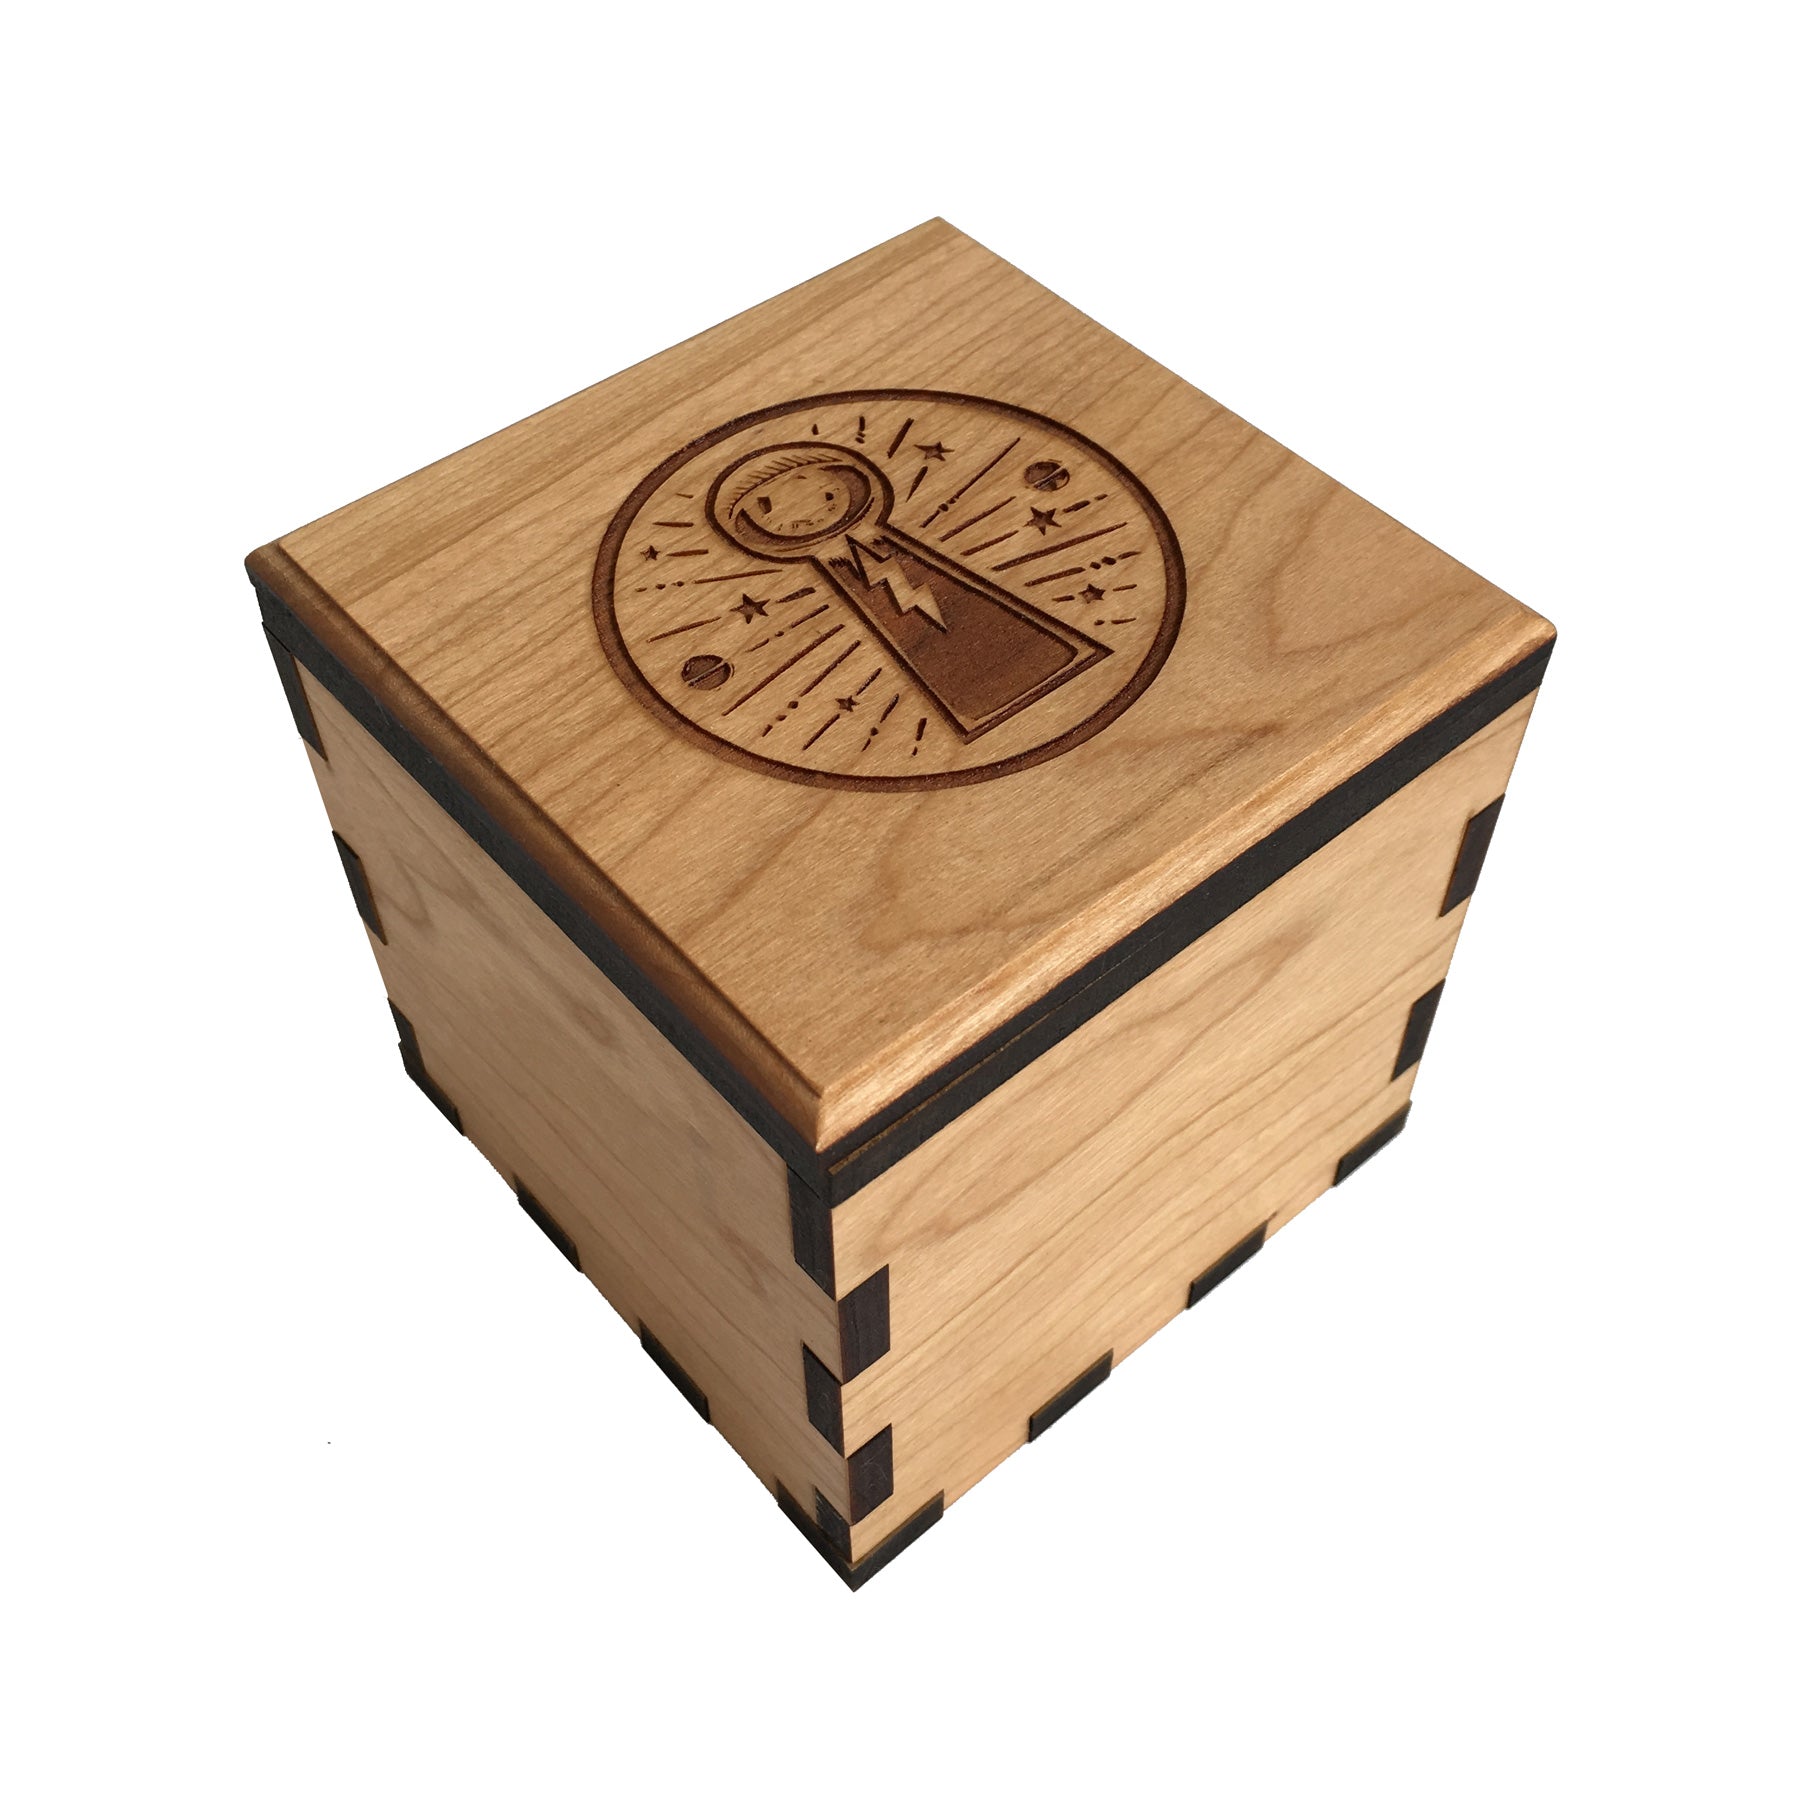 Deluxe handmade wooden stash box